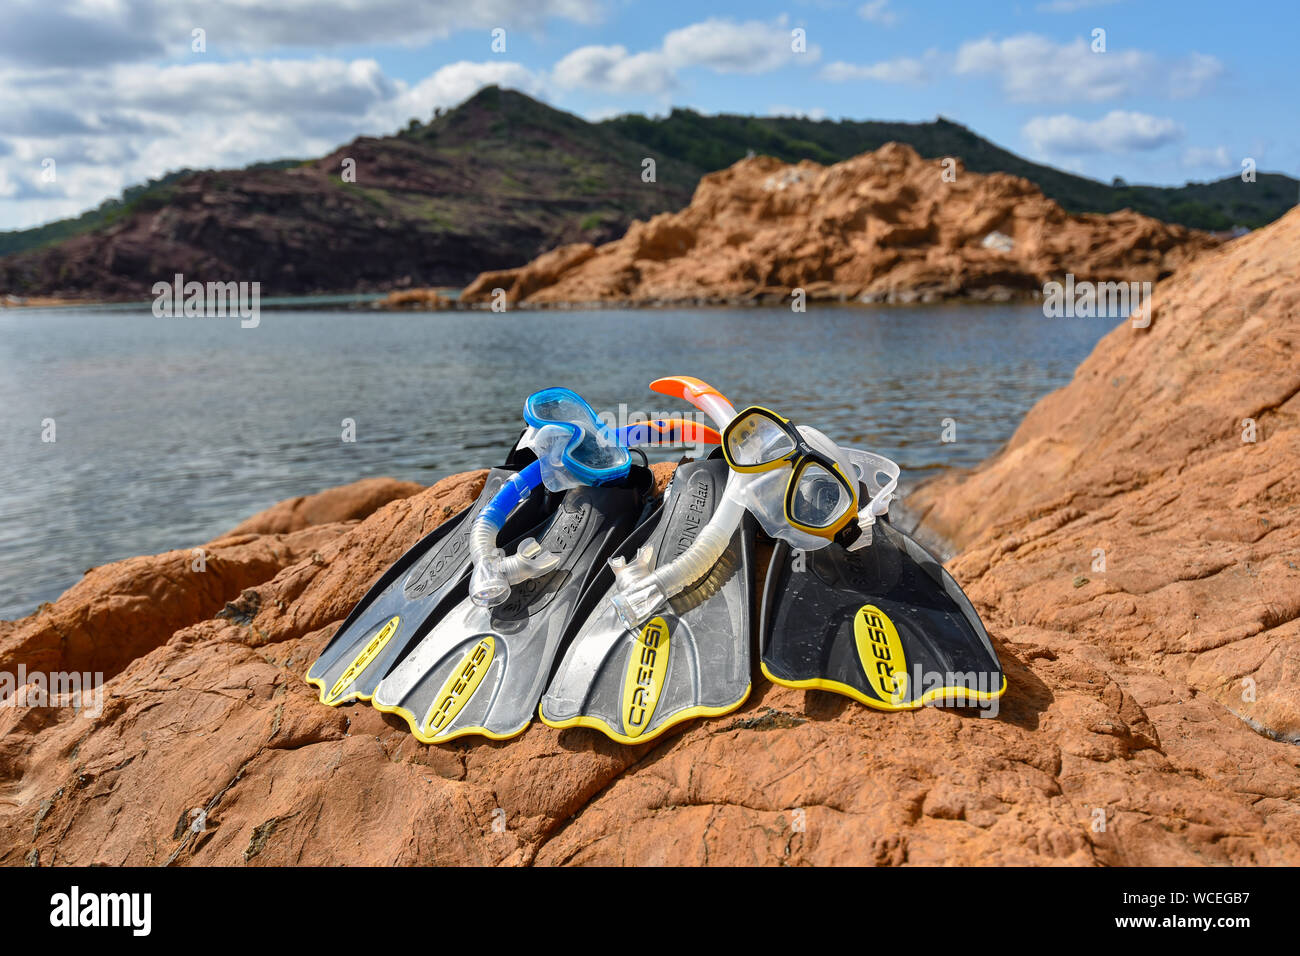 MENORCA, SPAIN - SEPTEMBER 25, 2017: snorkeling equipment of CRESSI brand on red ochre rocks of the beach 'cala pregonda' in Menorca. Stock Photo